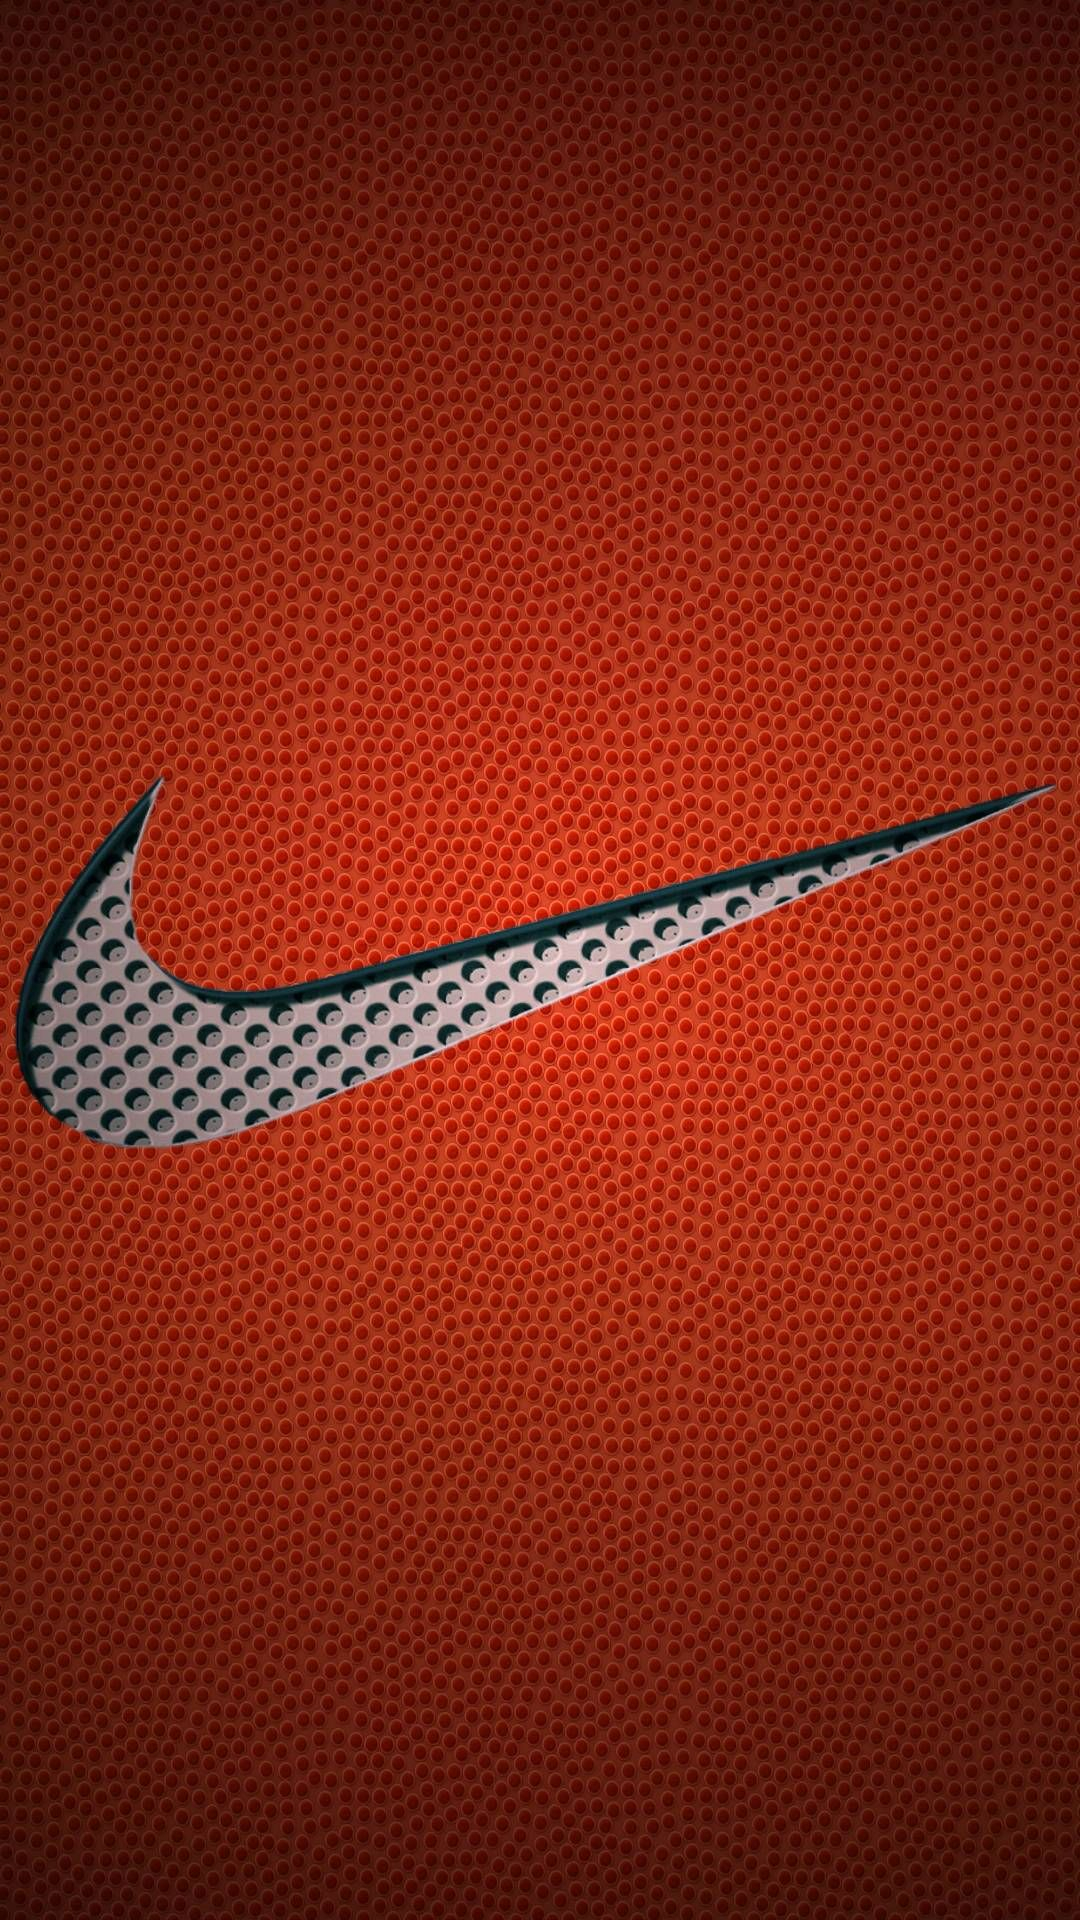 1080x1920 MuchaTseBle | Nike wallpaper, Nike logo wallpapers, Cool nike wallpapers